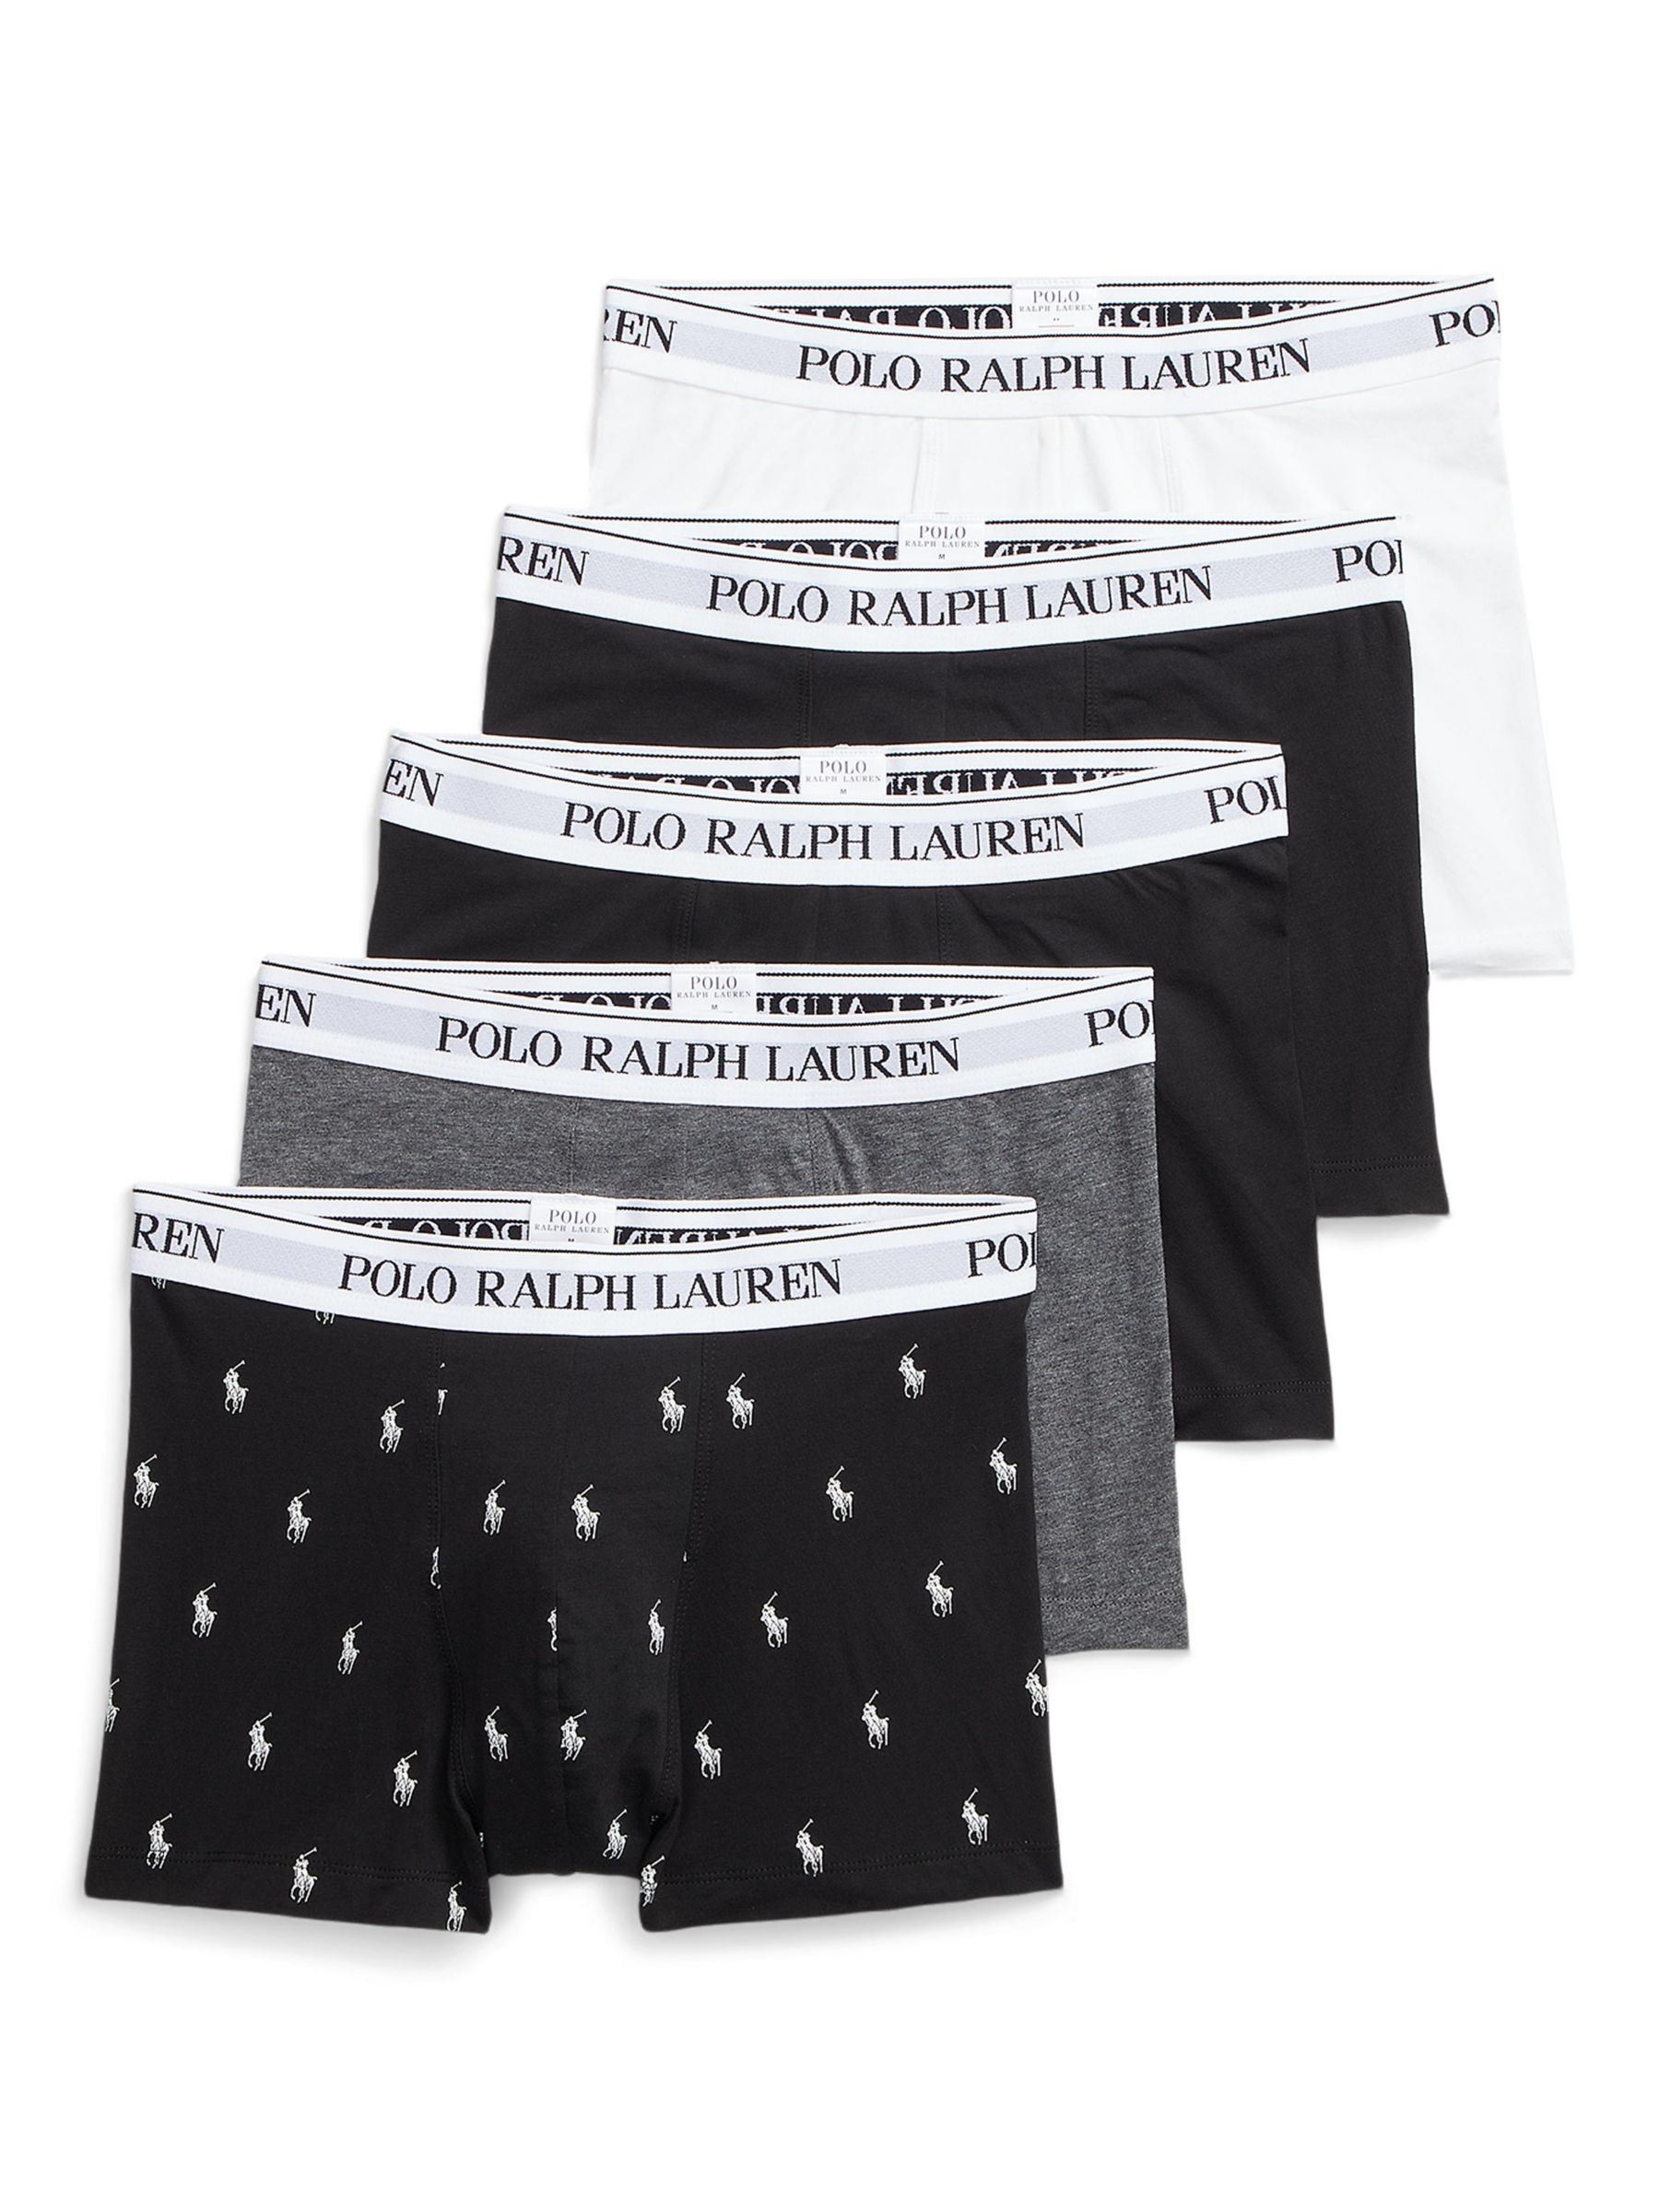 Polo Ralph Lauren Men's Underwear Classic Fit Brief Black Size XL Set Of 1  